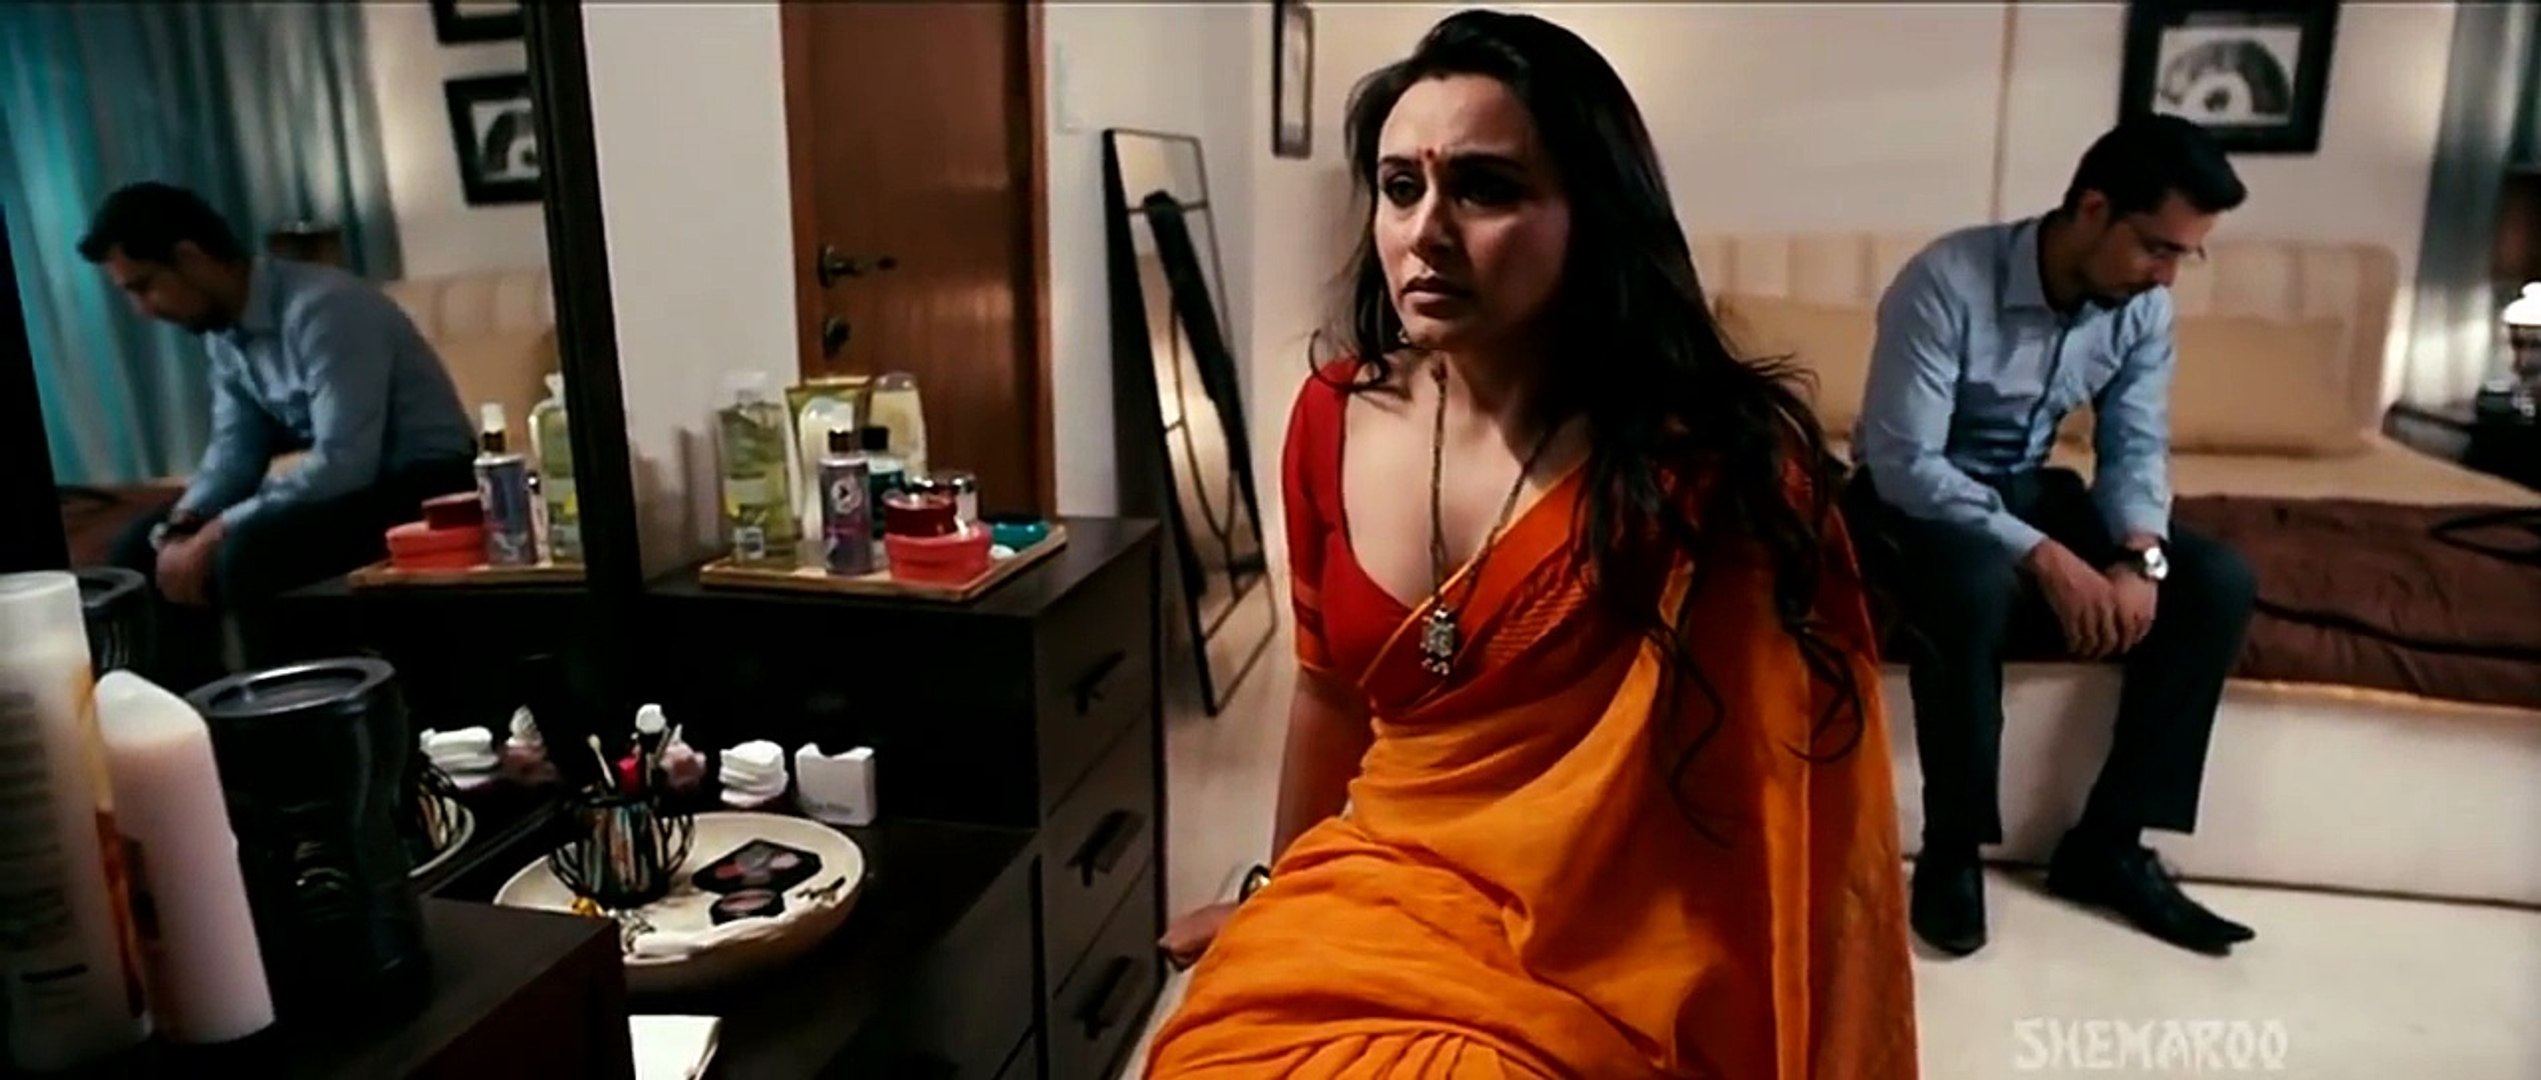 Bombay talkies sex scenes